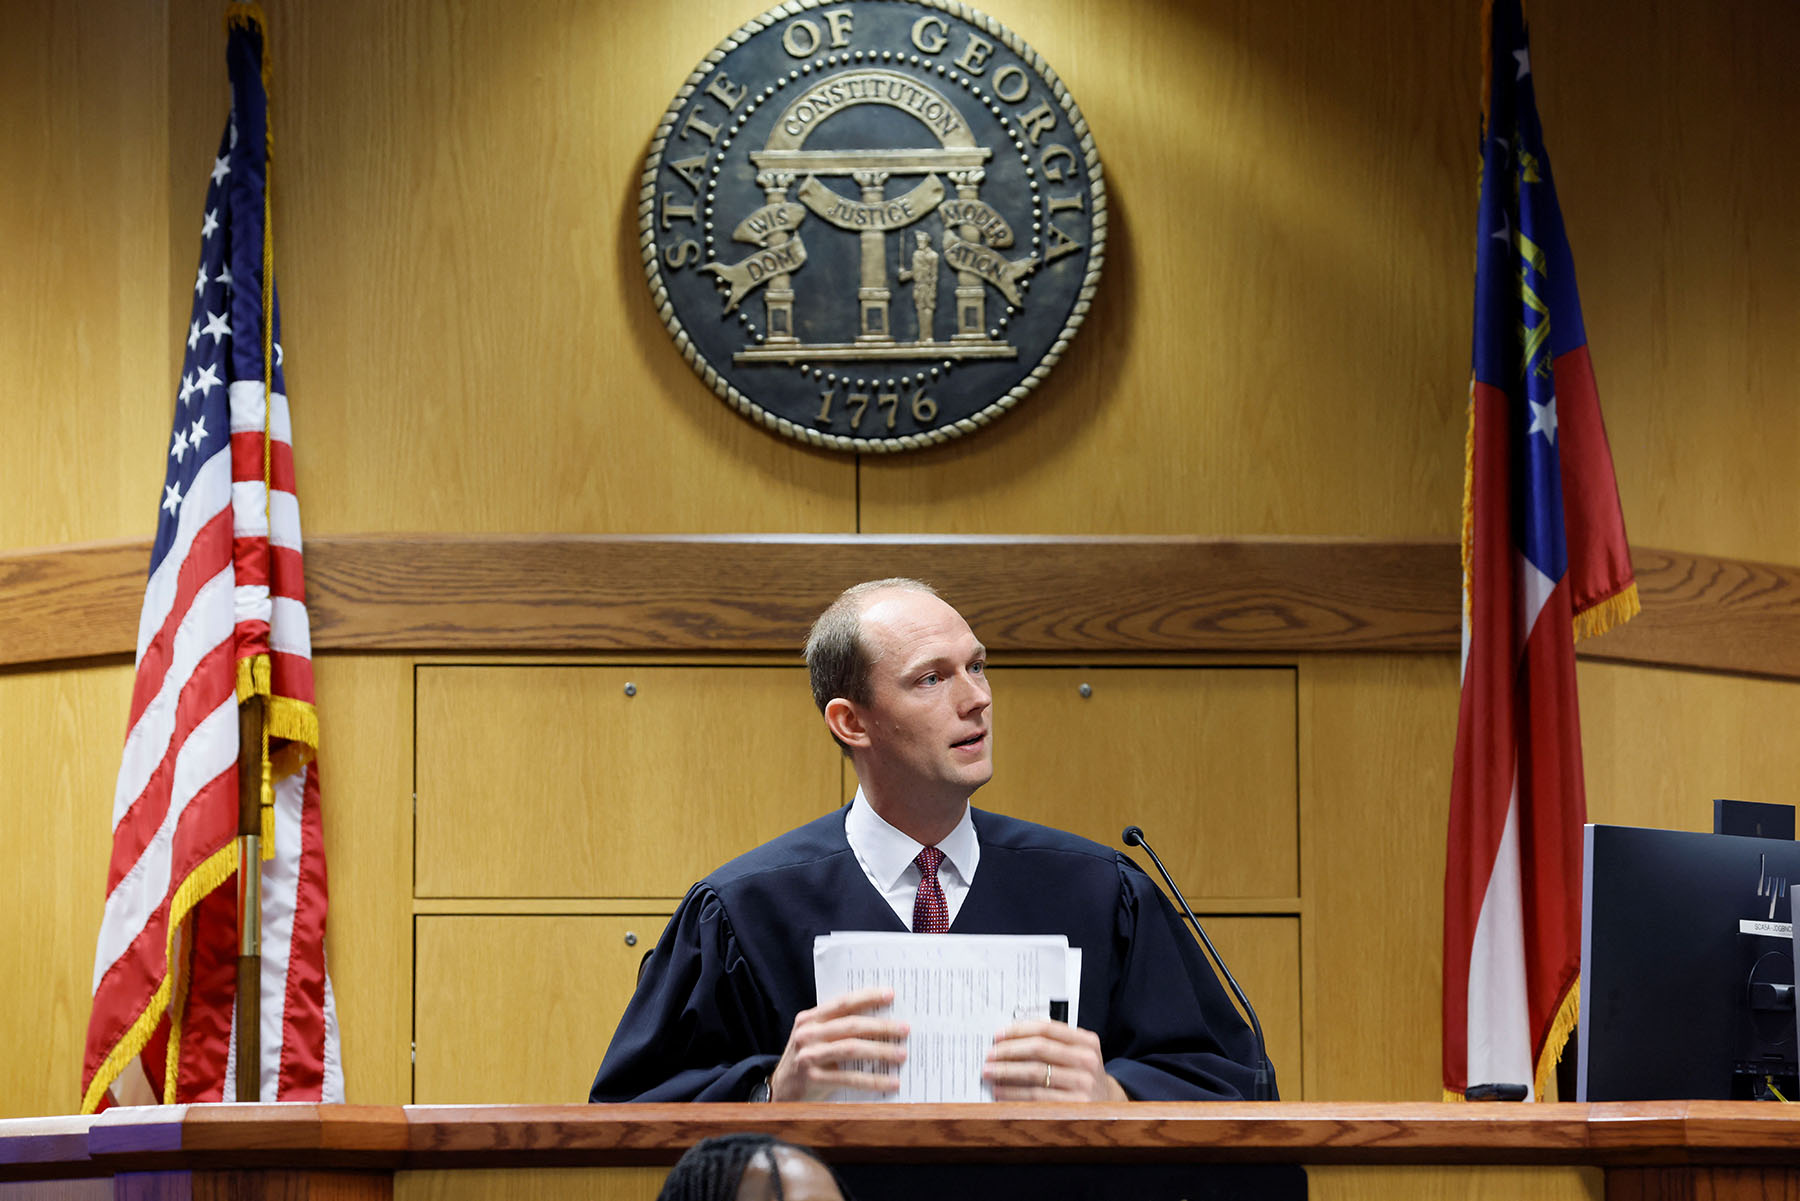 Motion hearing regarding access to transcript and interview jurors, in Atlanta